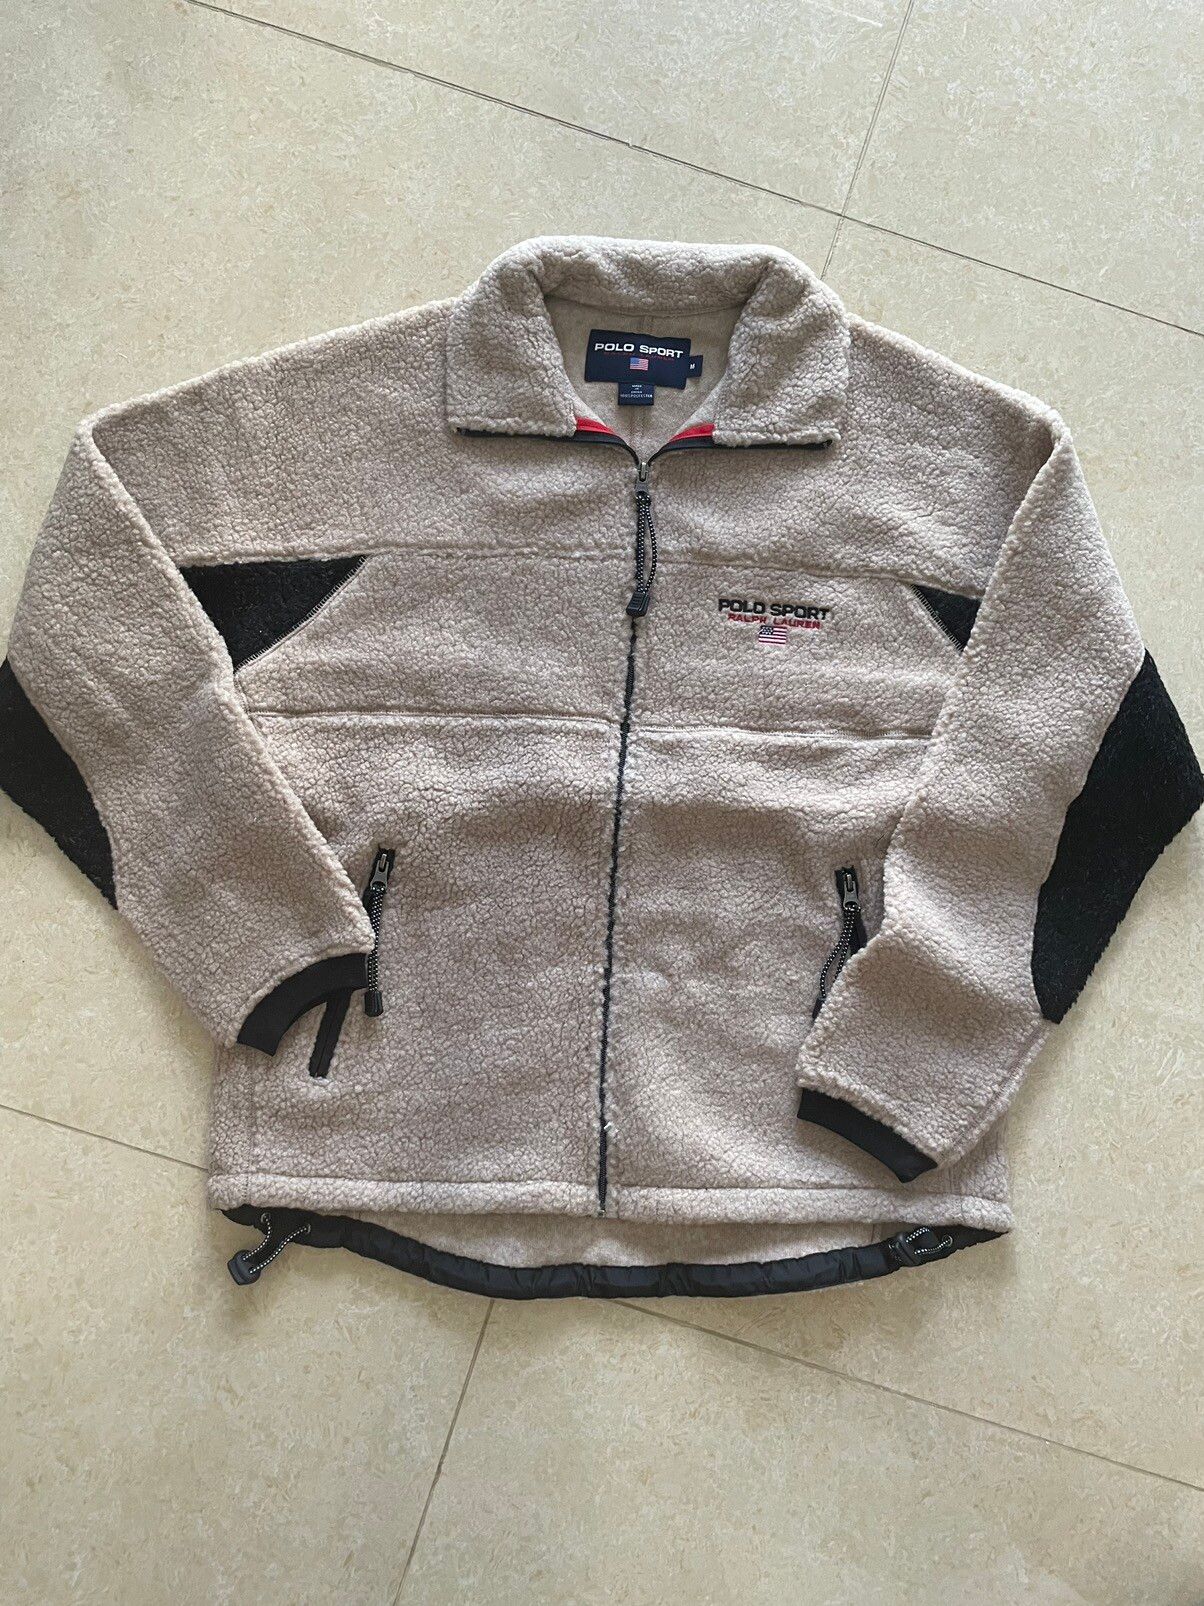 Polo Ralph Lauren Polo sport fleece jacket M | Grailed